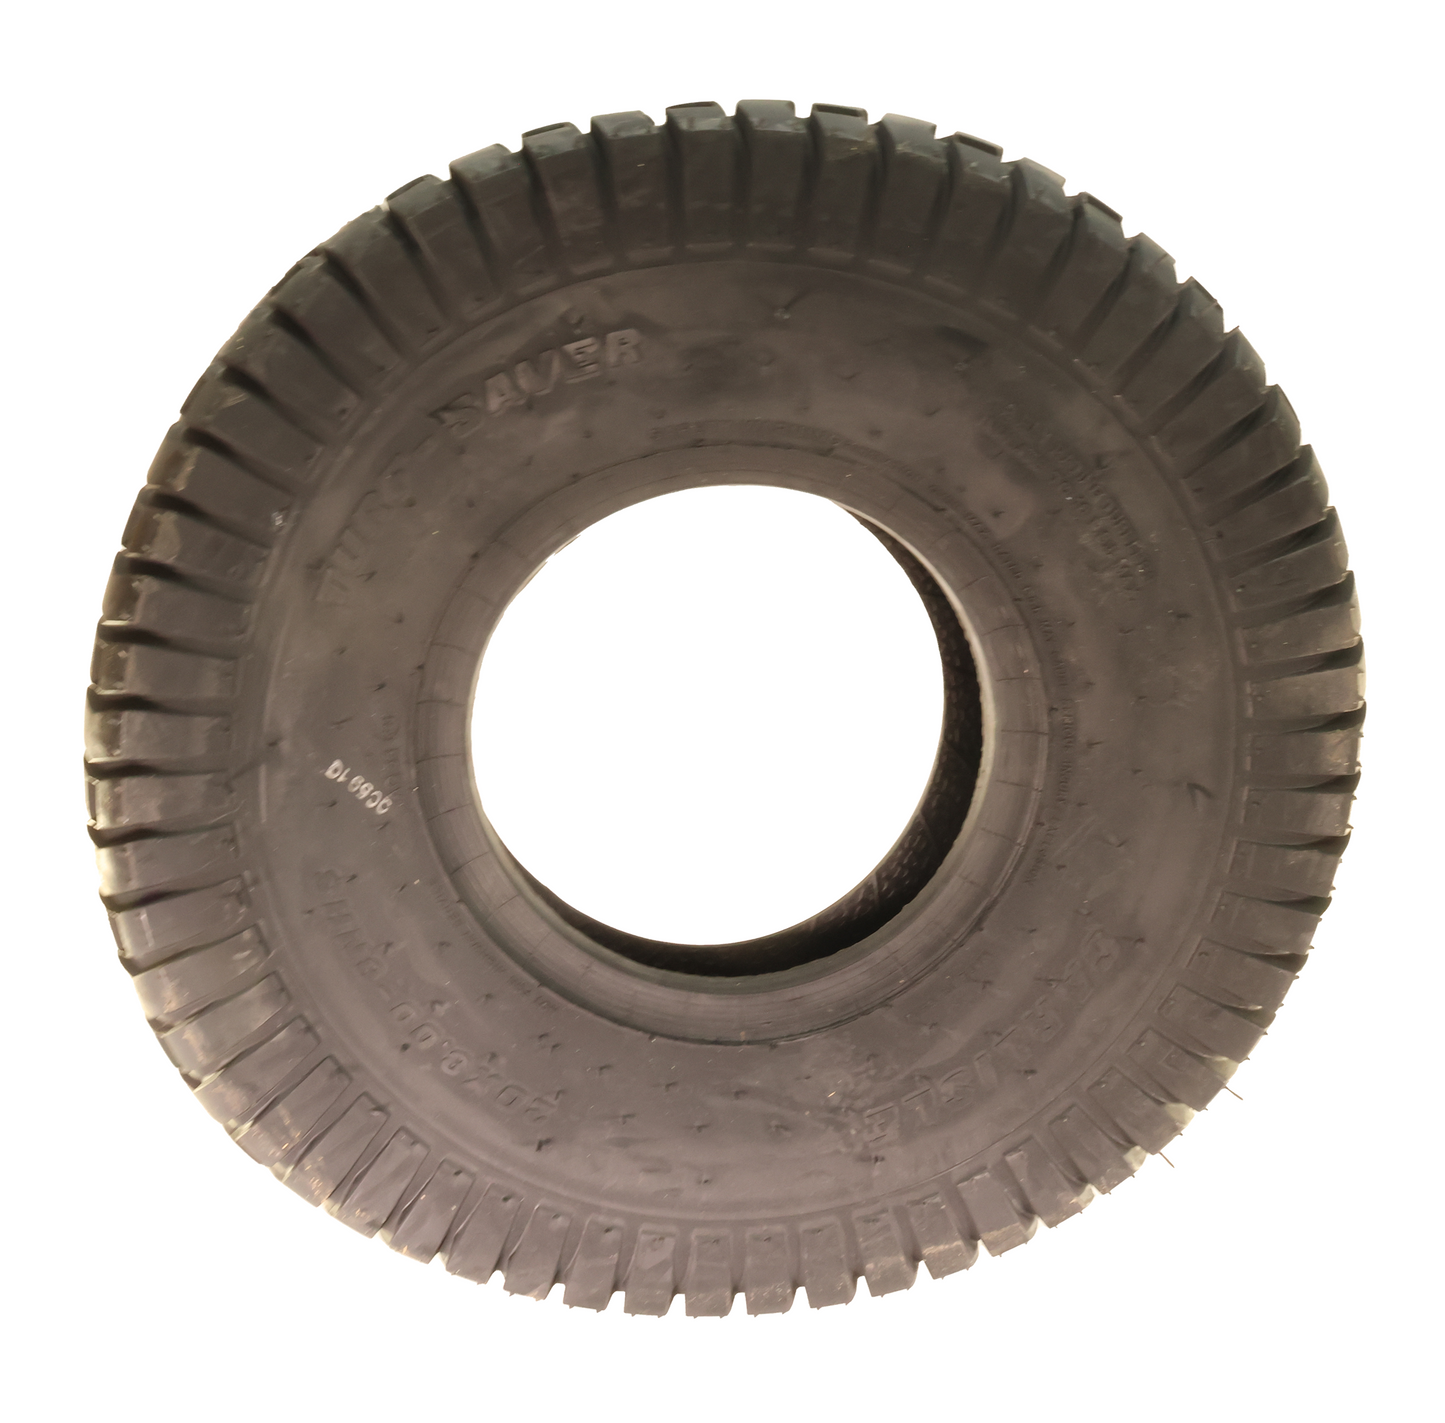 John Deere Original Equipment Tire - M123808